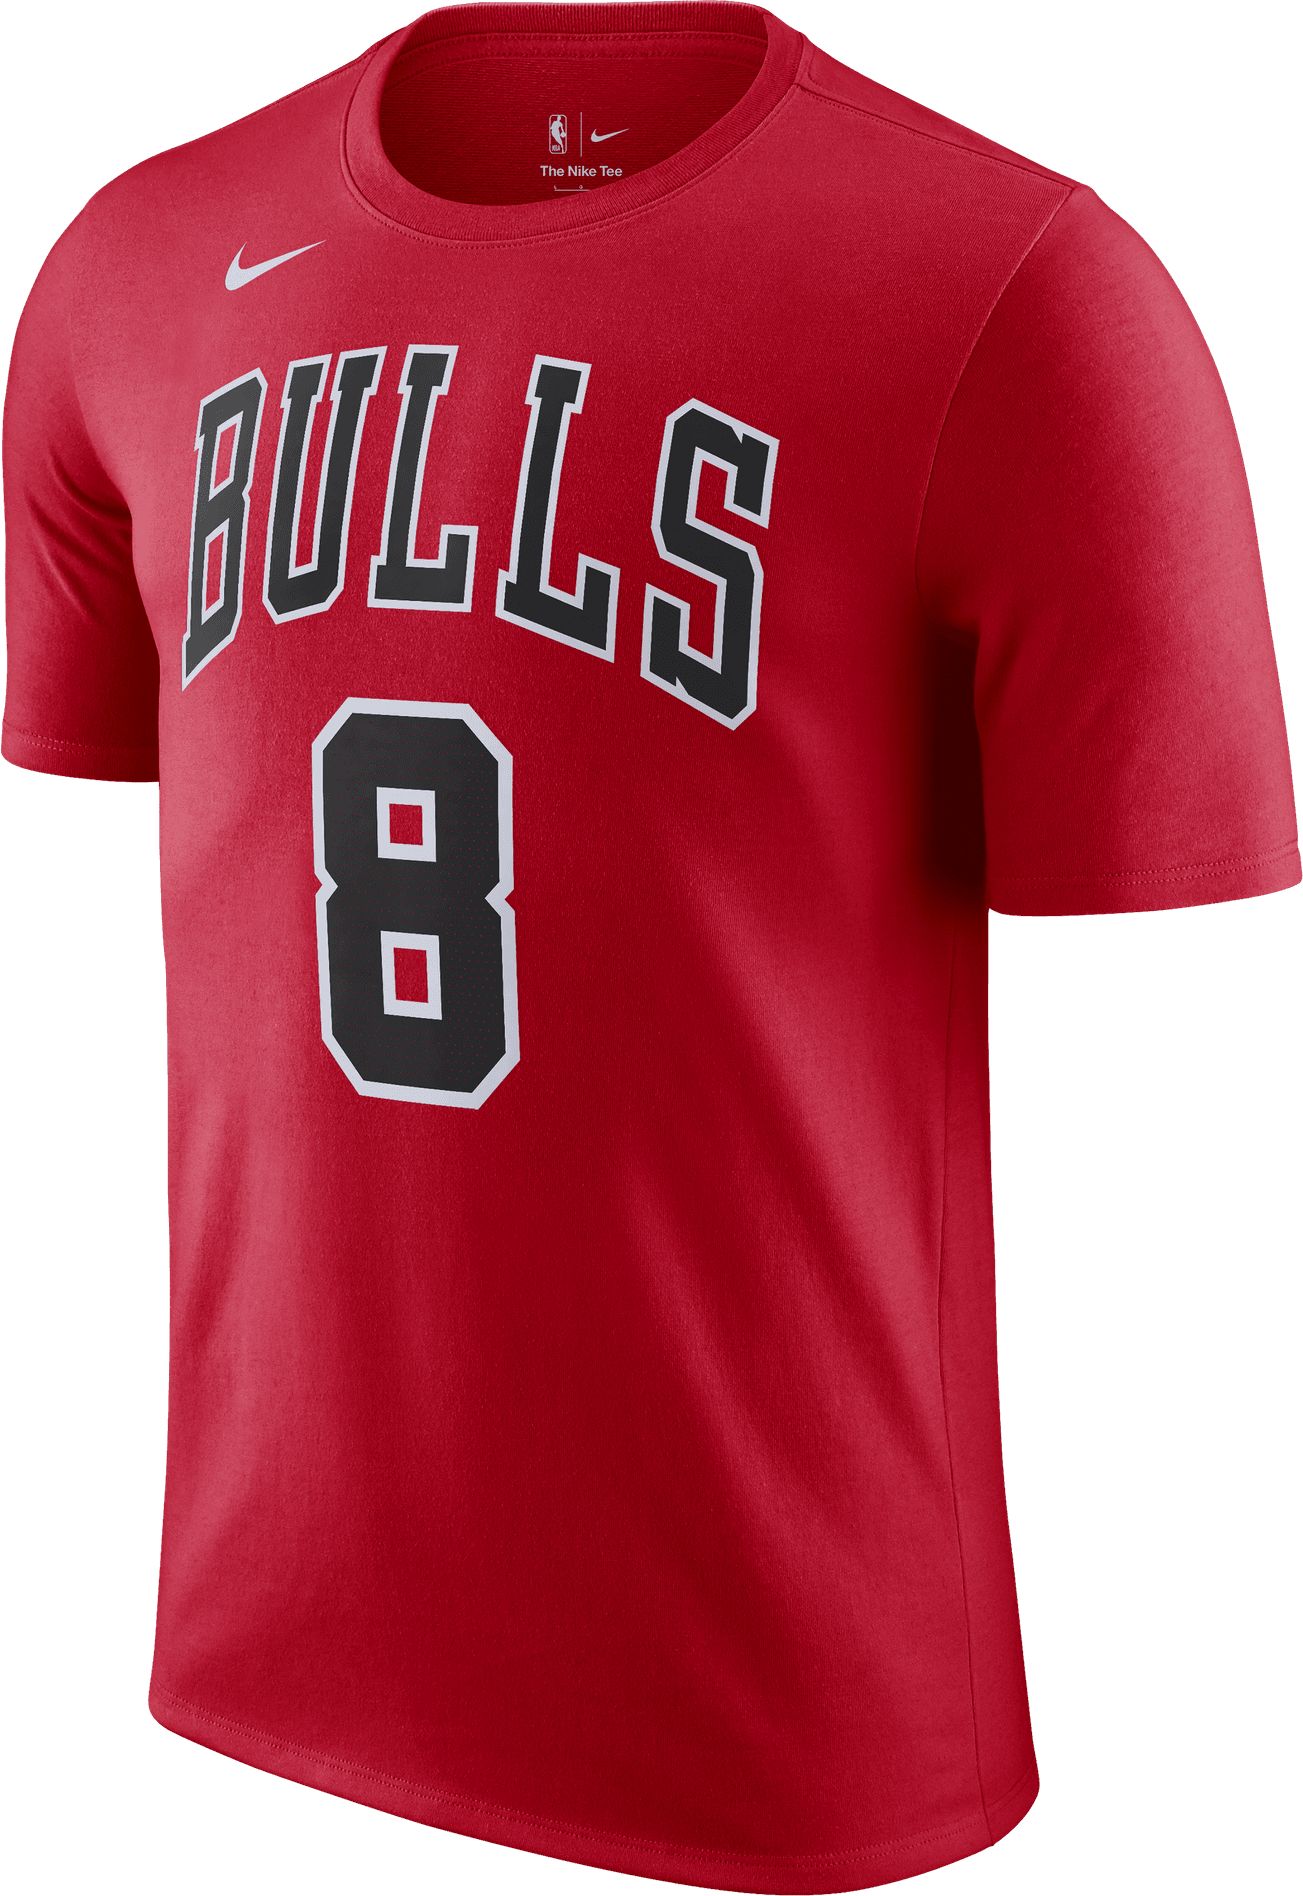 NIKE, Chicago Bulls Men's Nike NBA T-Shir